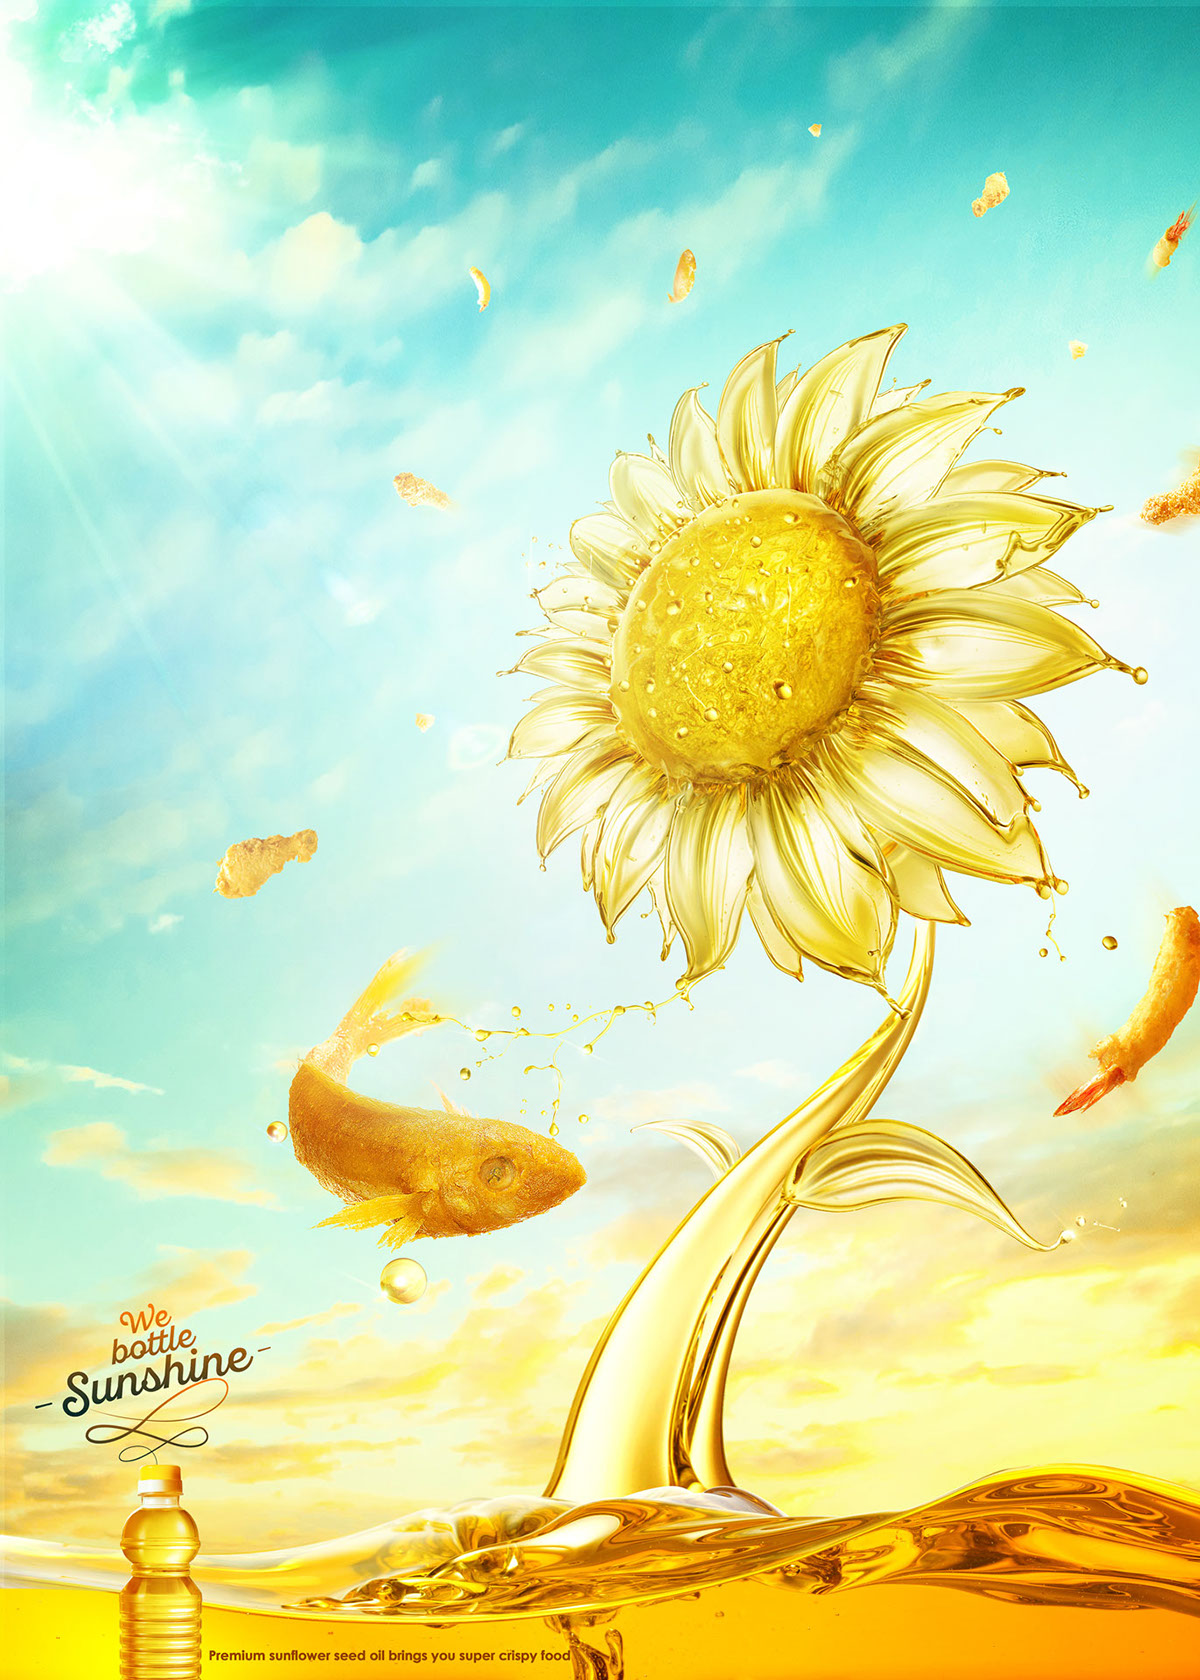 sunflower team TEAMWORK idea Sun cooking_oil_food_stylist_commercial_photographer_advertising_liquid_yellow_vietnam_ideas_creative_sunshine_flower_sky_splashing